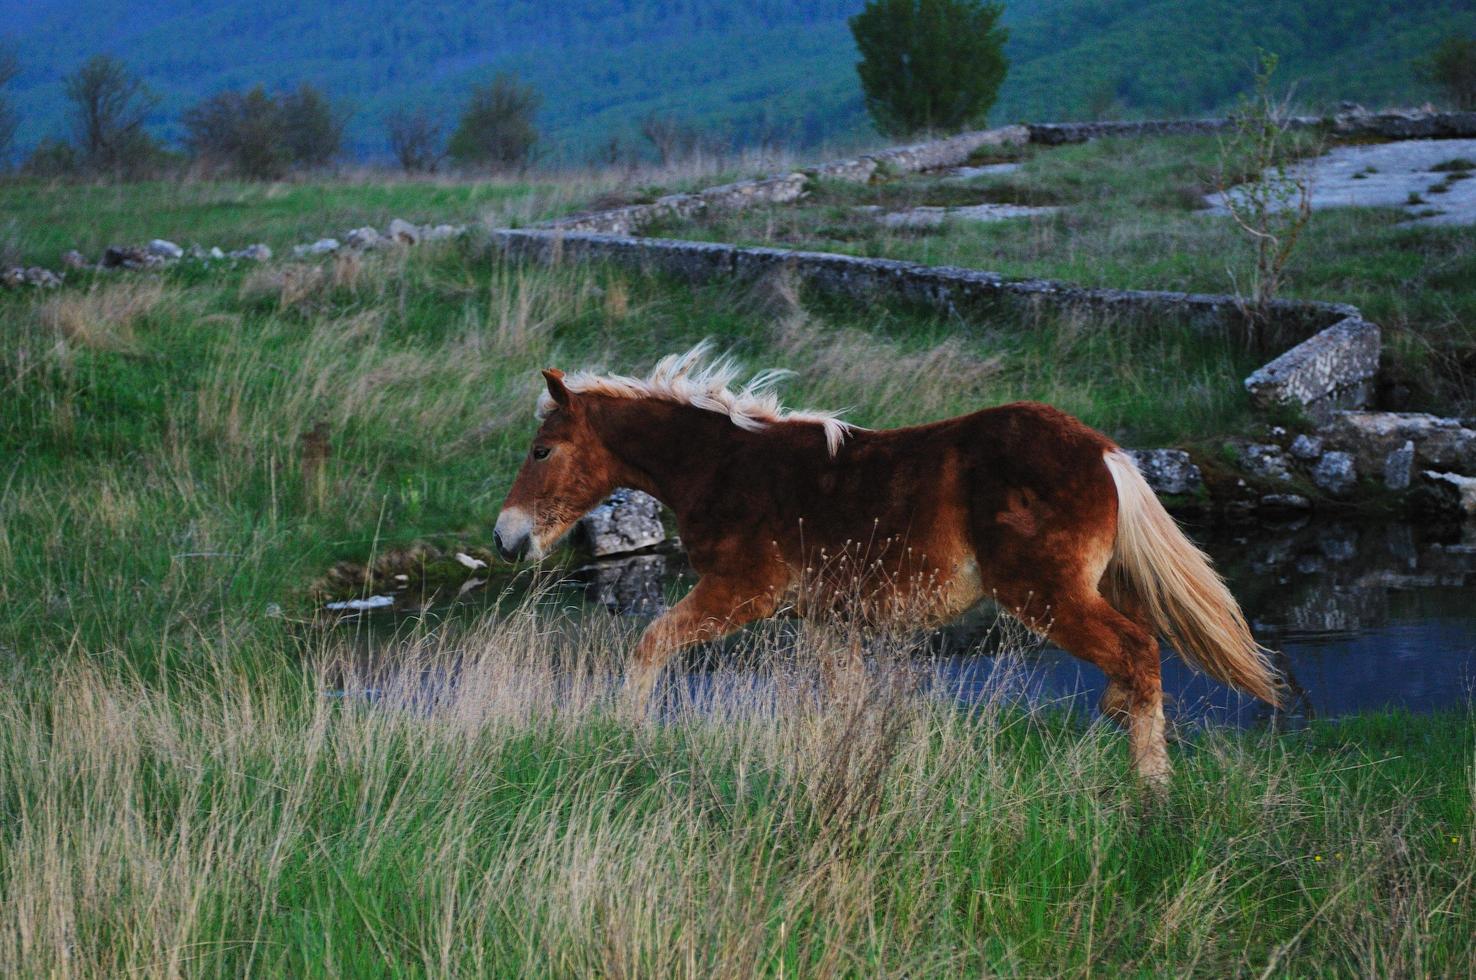 Horses in field photo